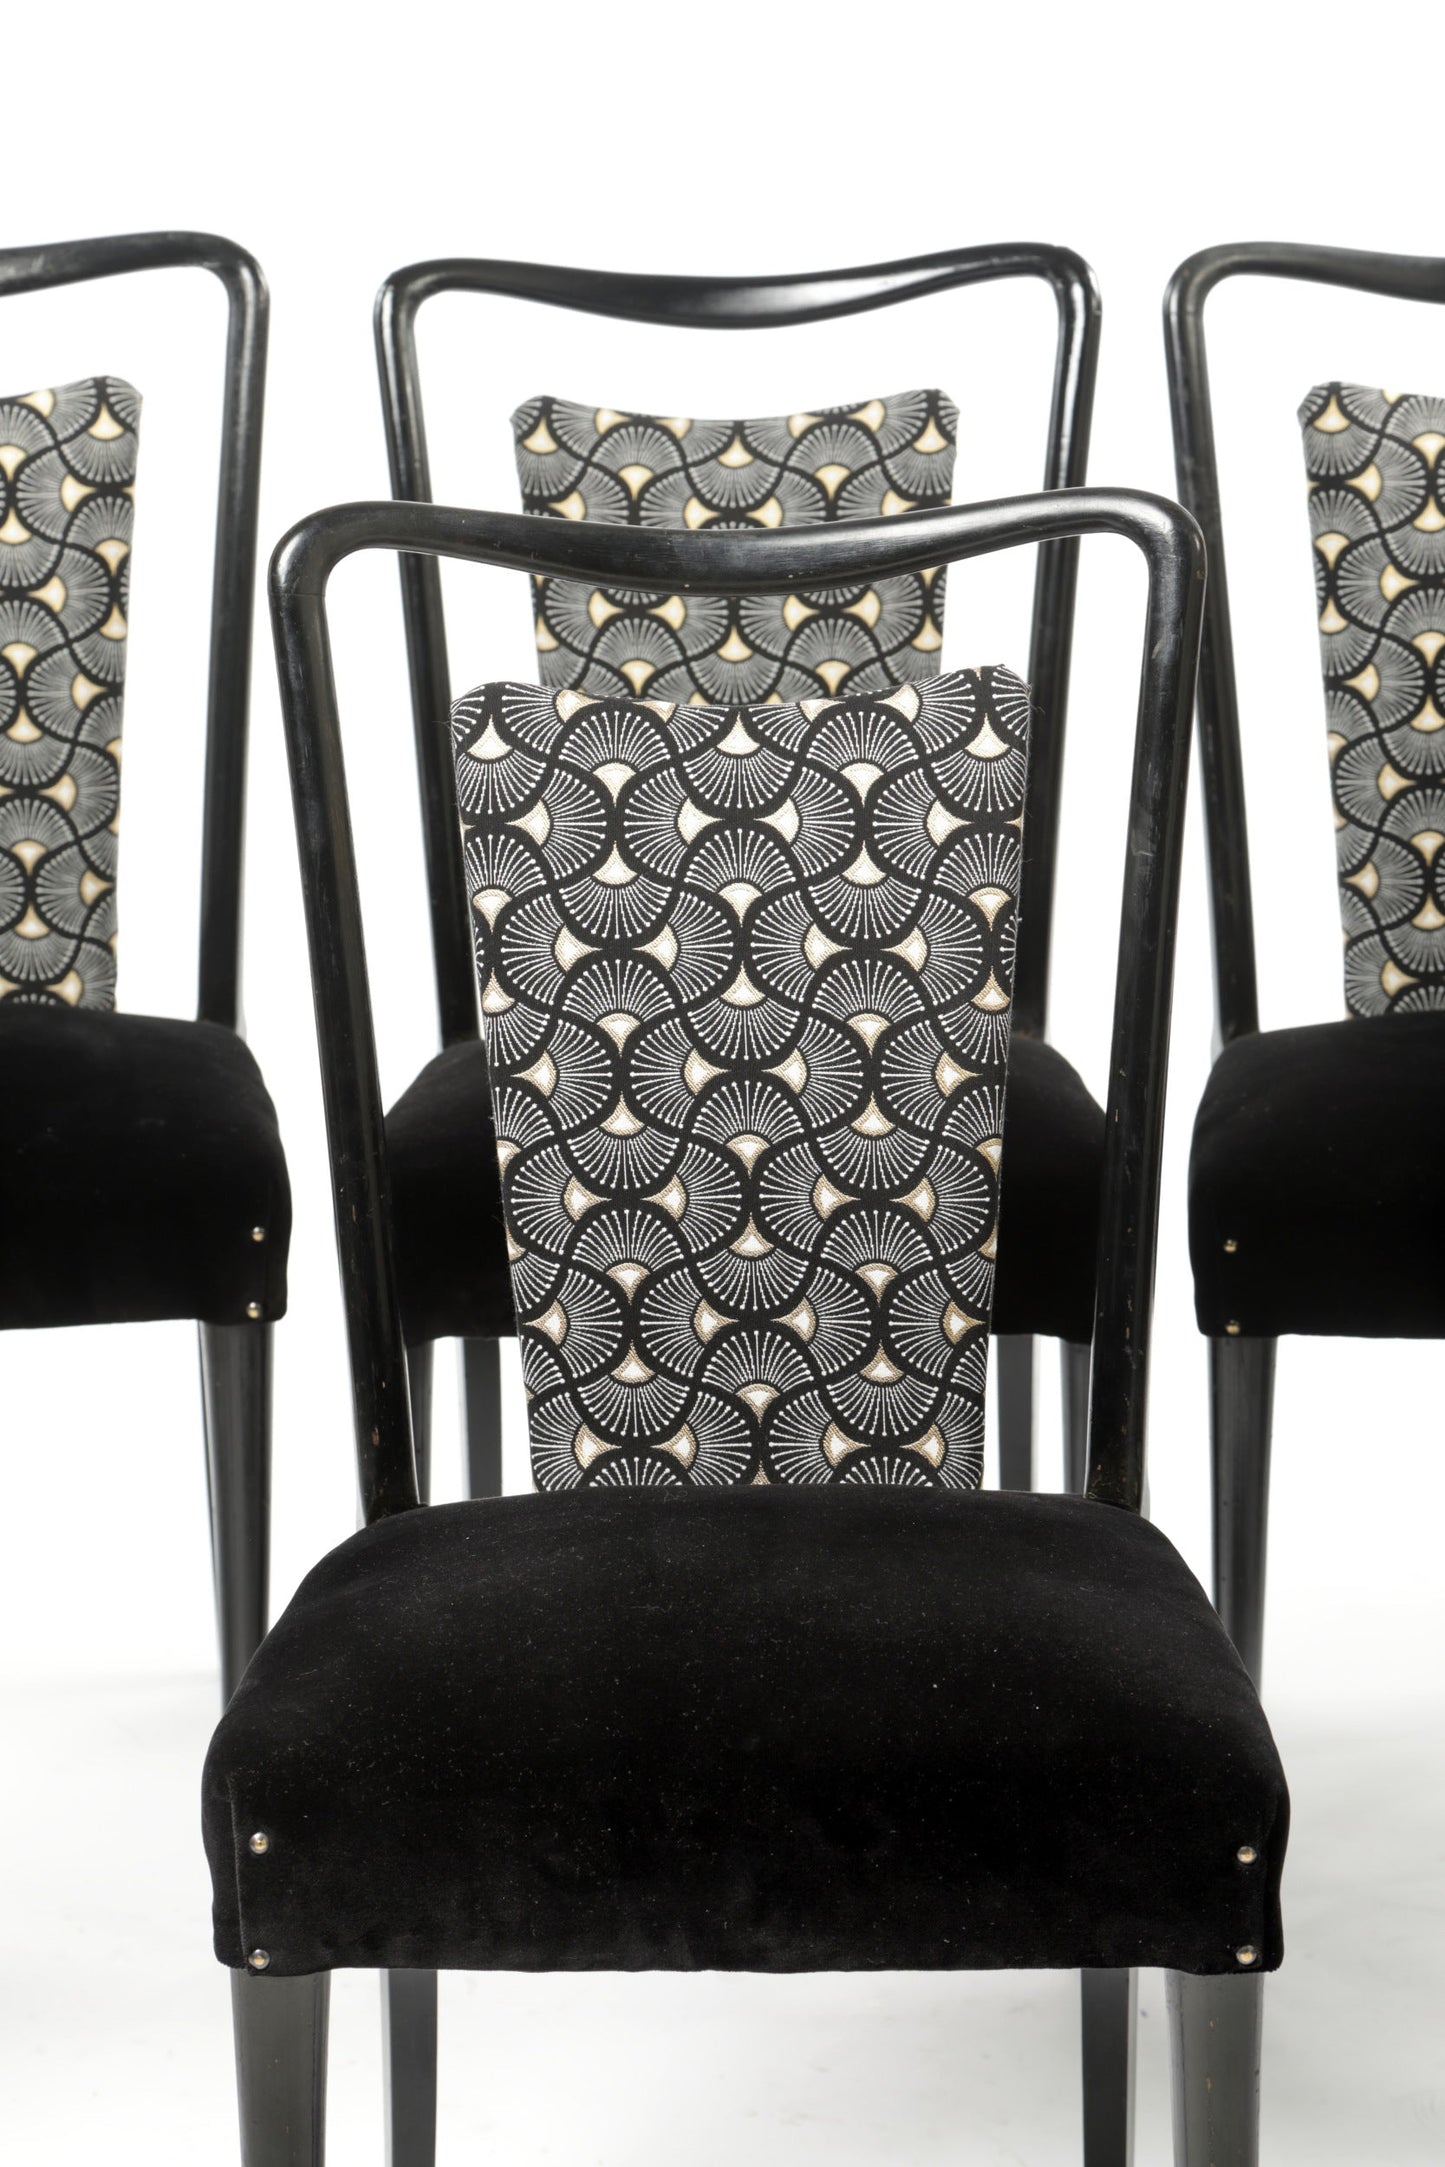 Six 1950s Guglielmo Ulrich chairs